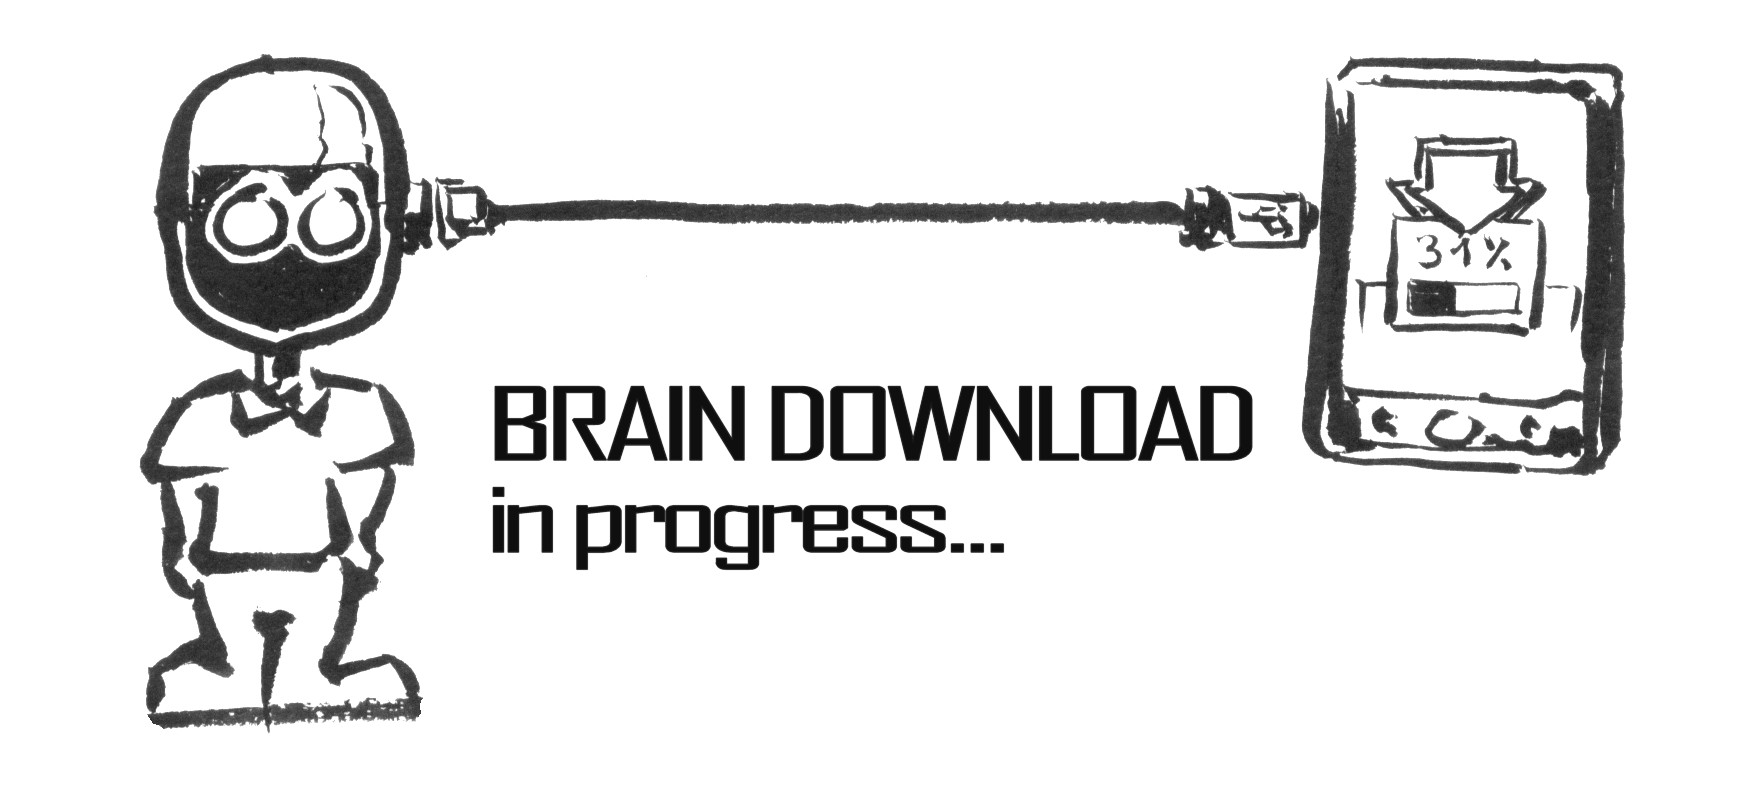 brain-download.jpg